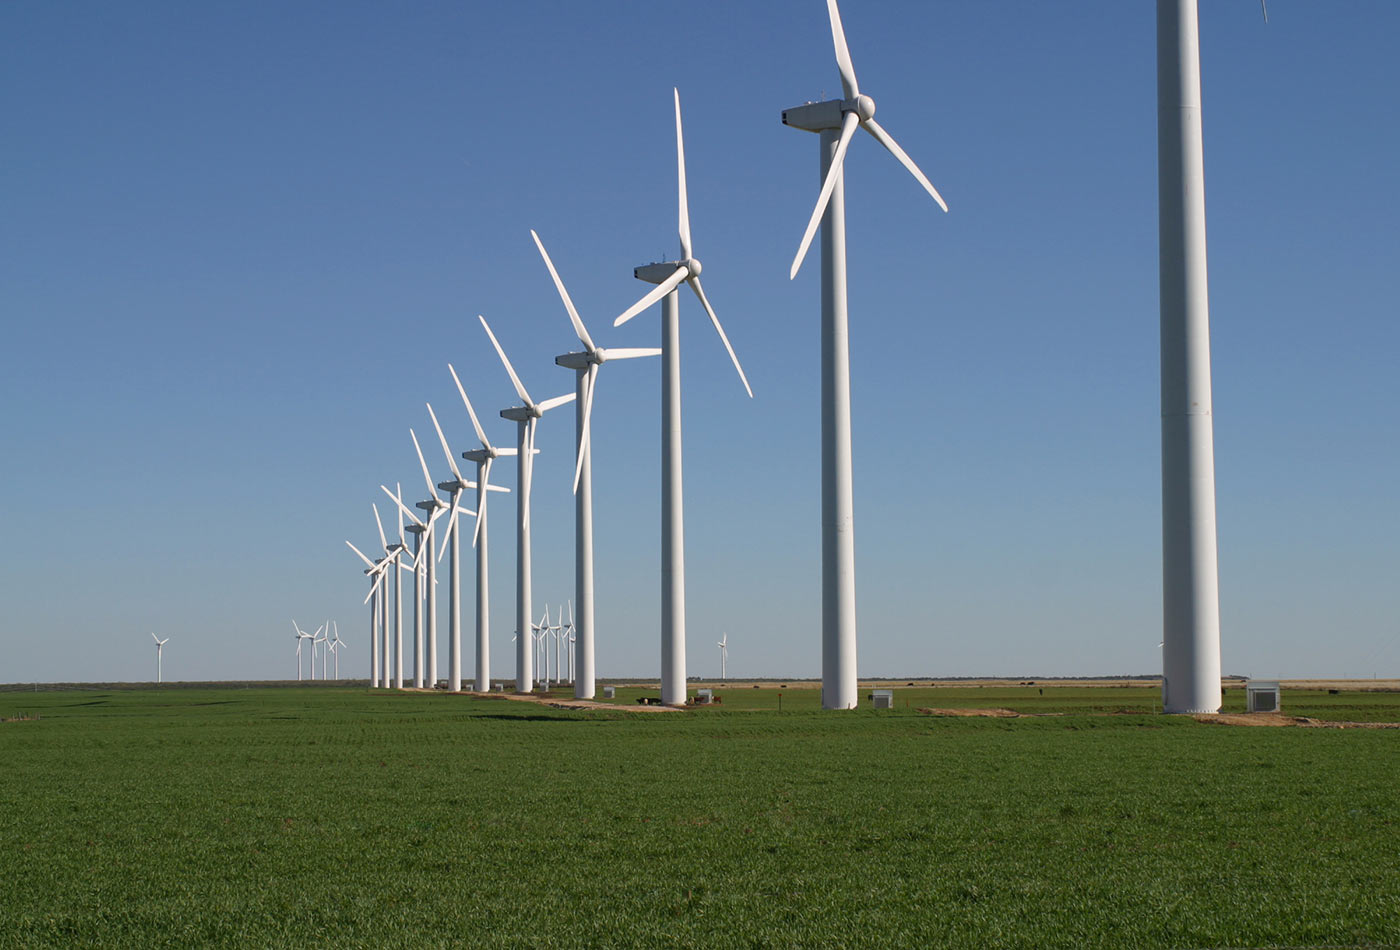 The Brazos Wind Farm